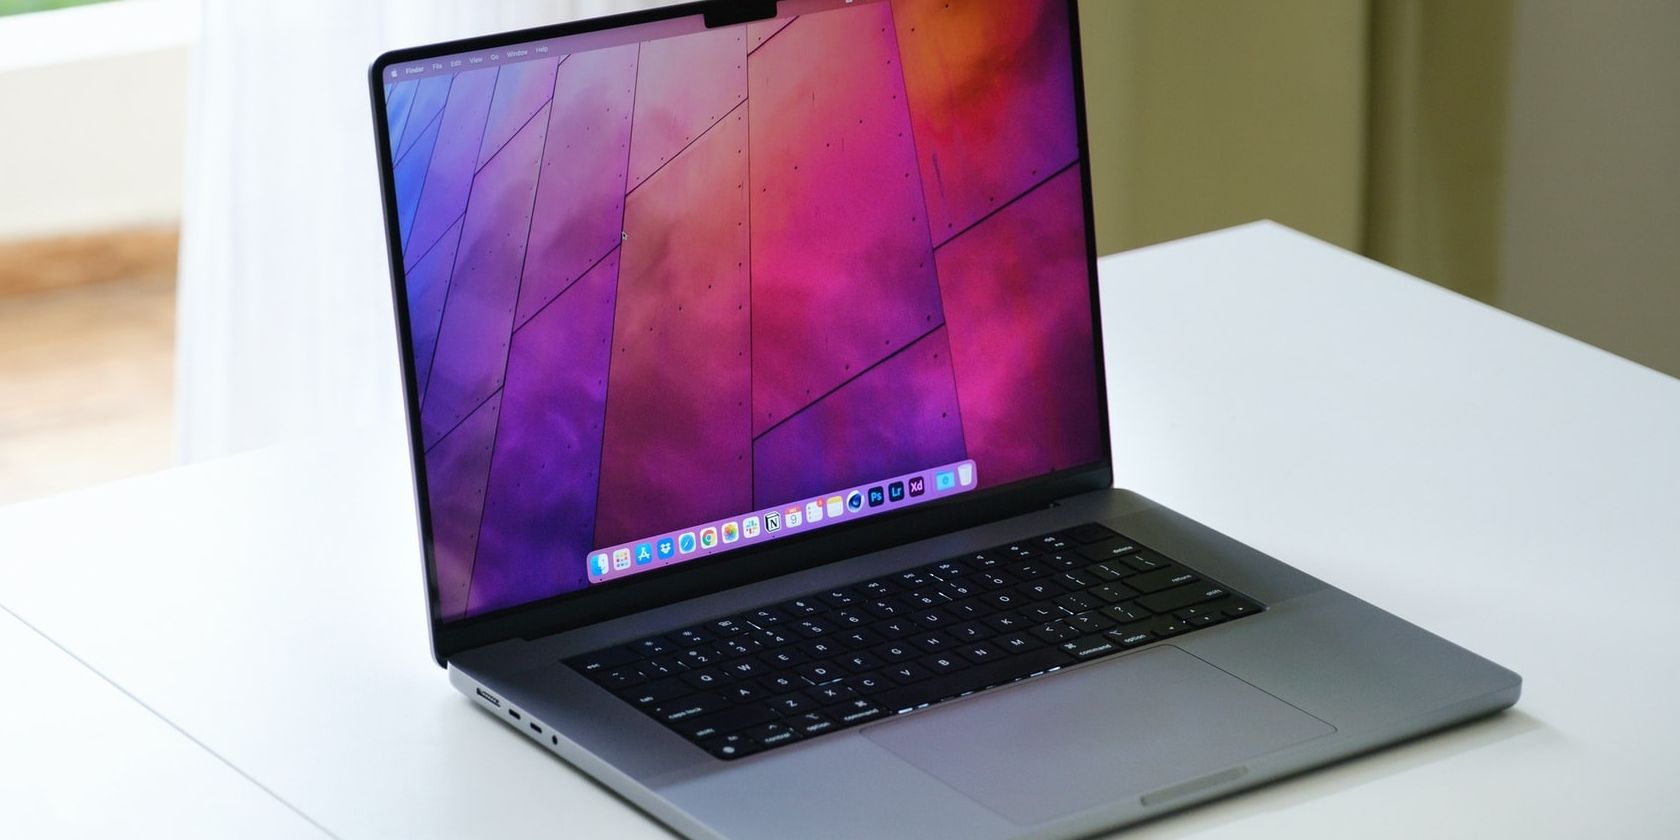 Open MacBook sitting on desk